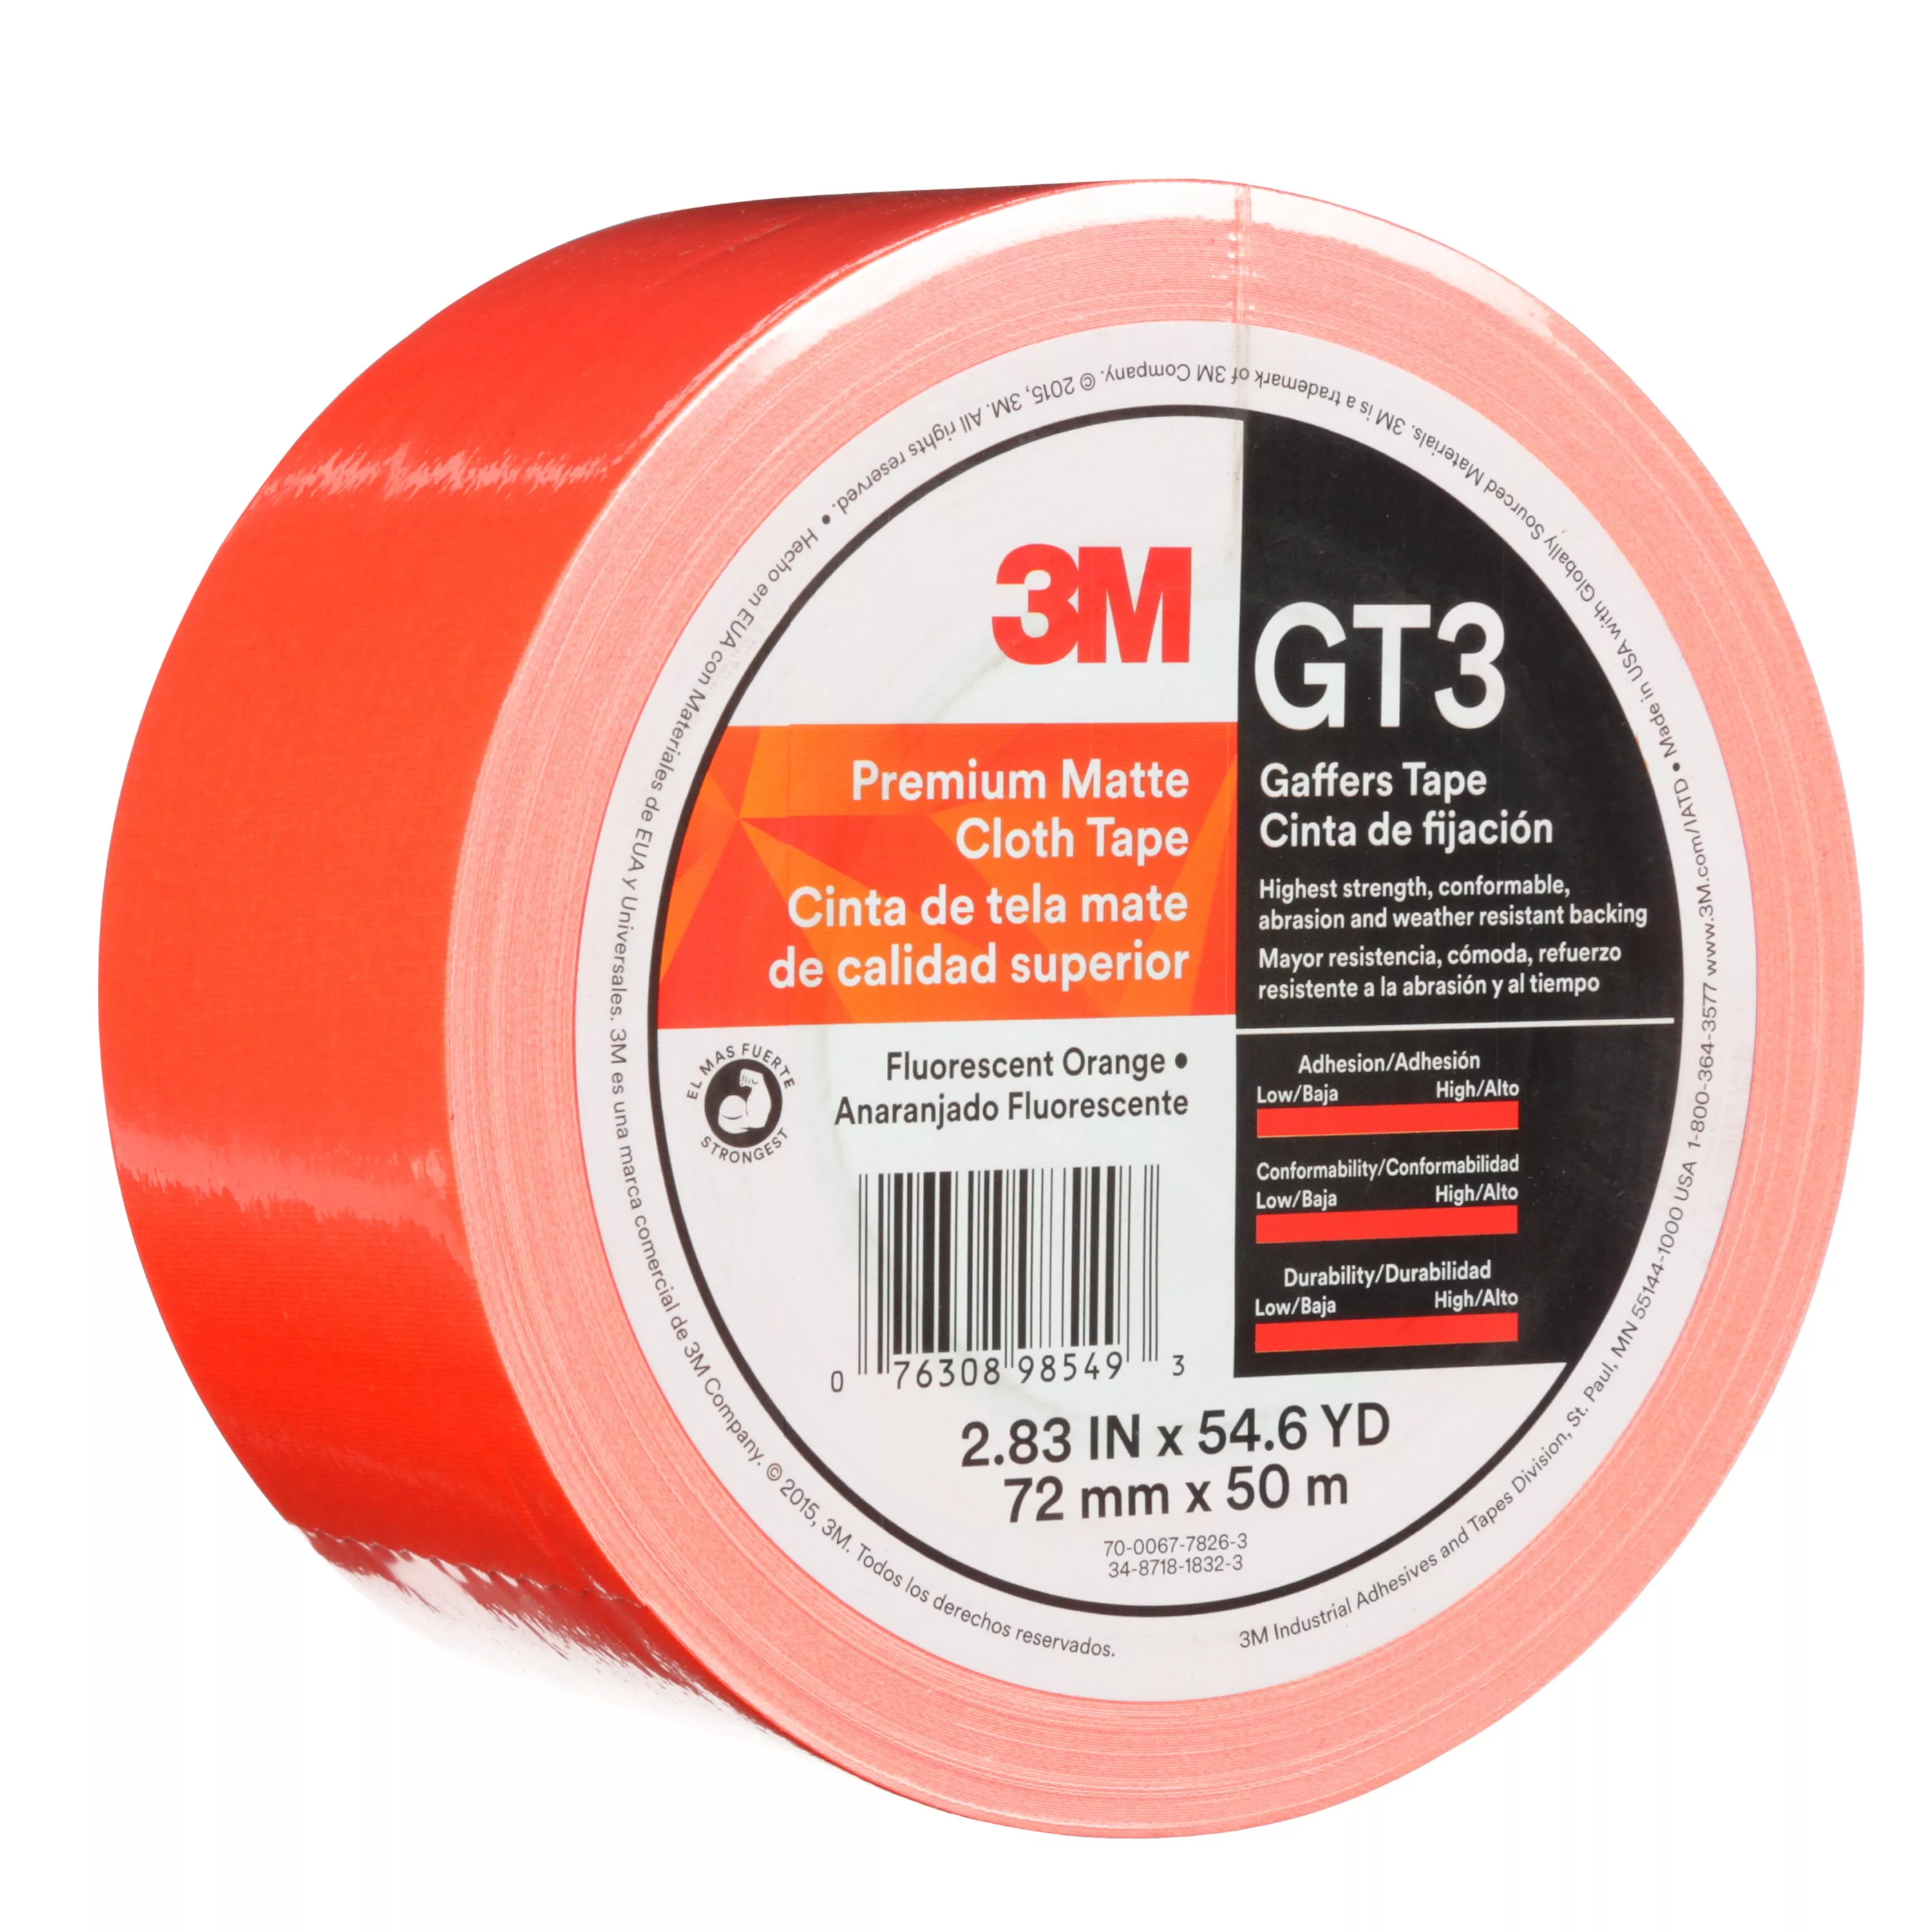 3M™ Premium Matte Cloth (Gaffers) Tape GT3, Fluorescent Orange, 72 mm x
50 m, 11 mil, 16/Case